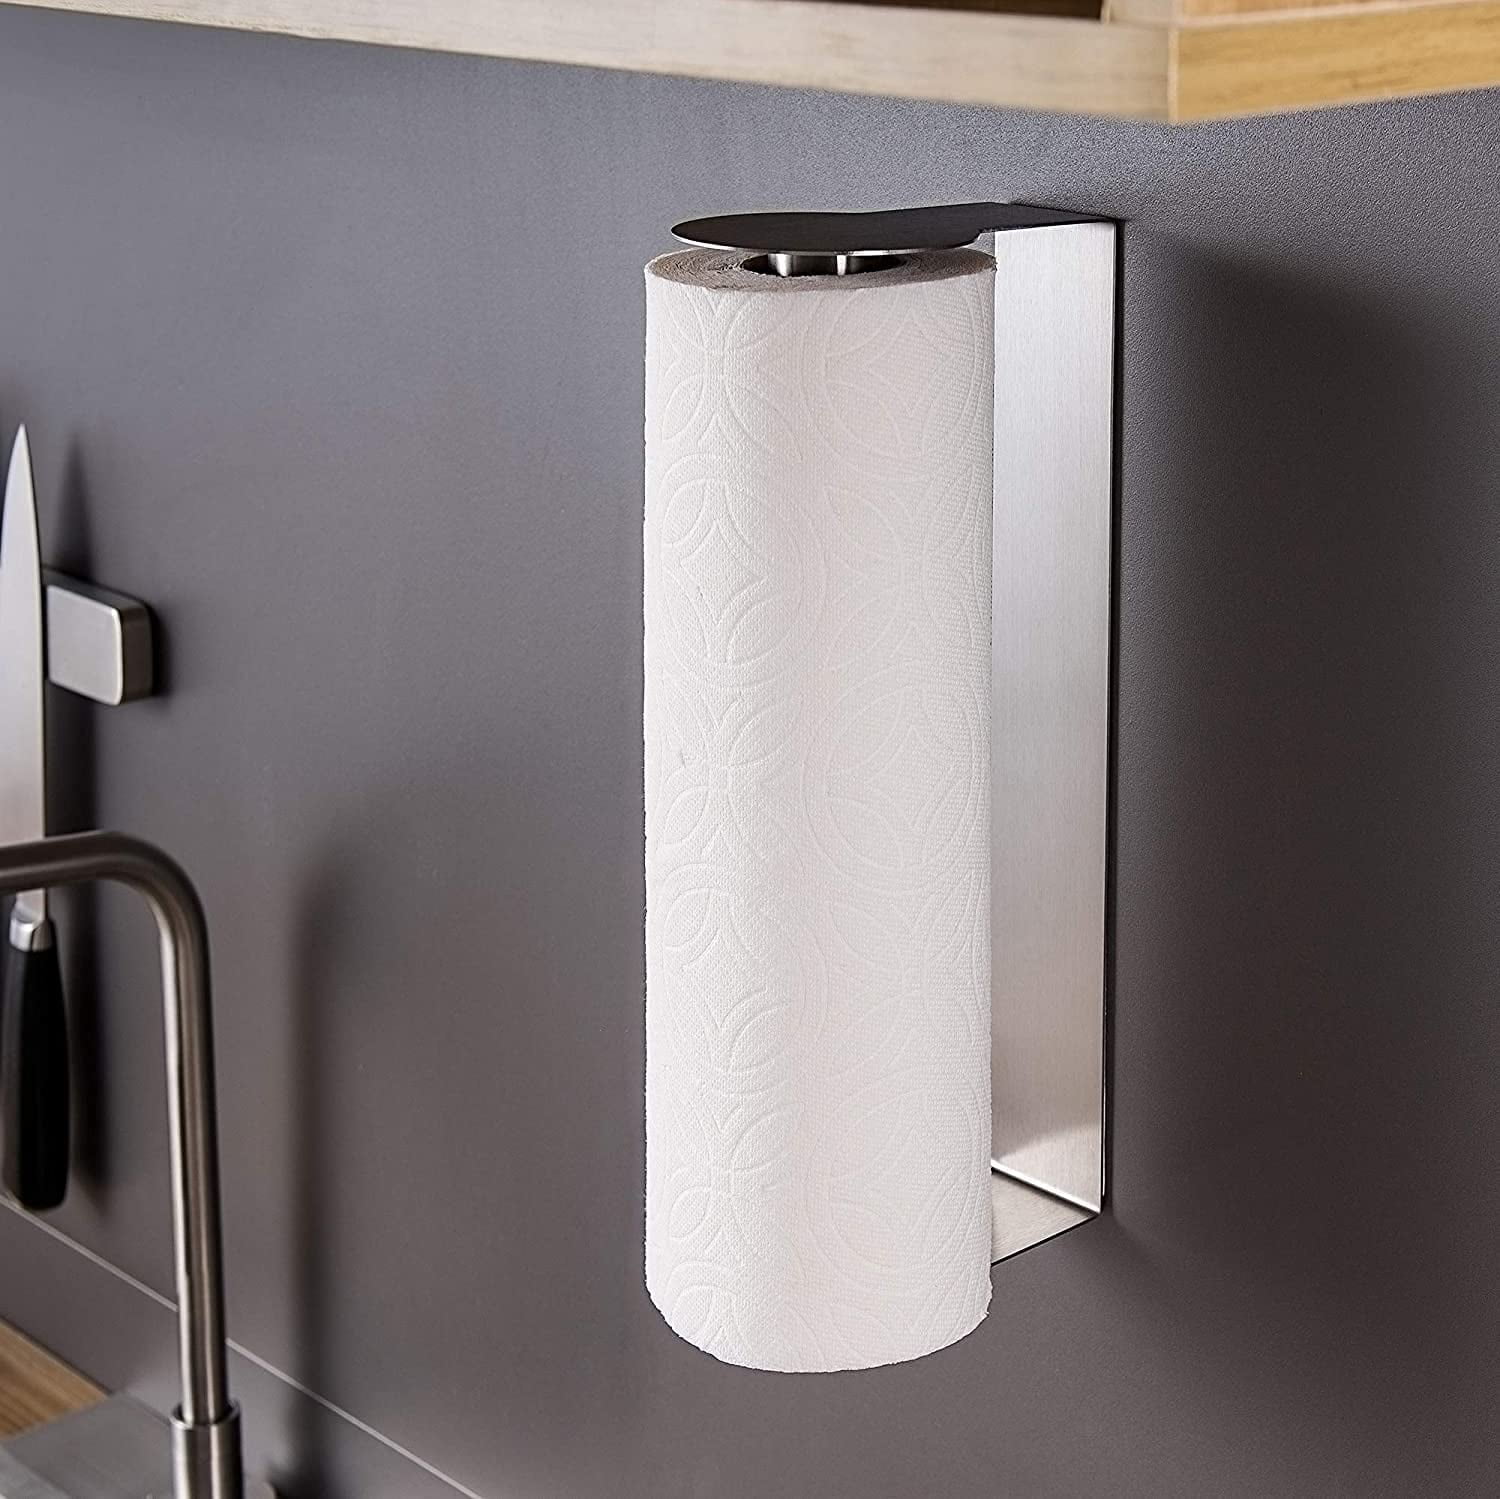 Under Cabinet Mount Paper Towel Holder,Stainless Paper Towel Holder for Kitchen Bathroom JINHAI Self Adhesive Paper Towel Holder 